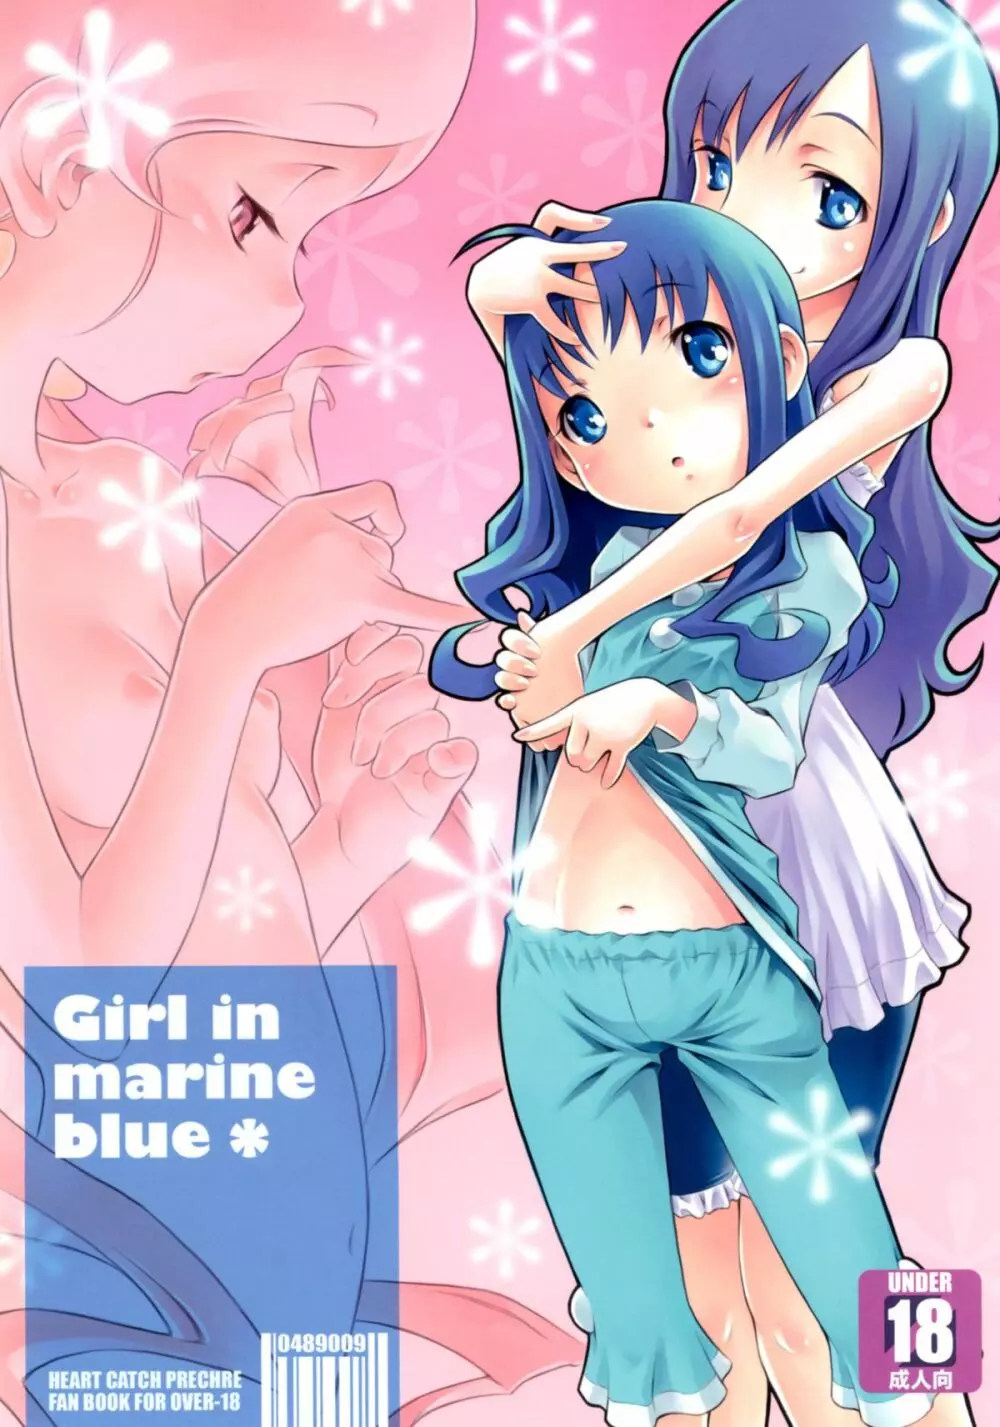 Girl in marine blue＊